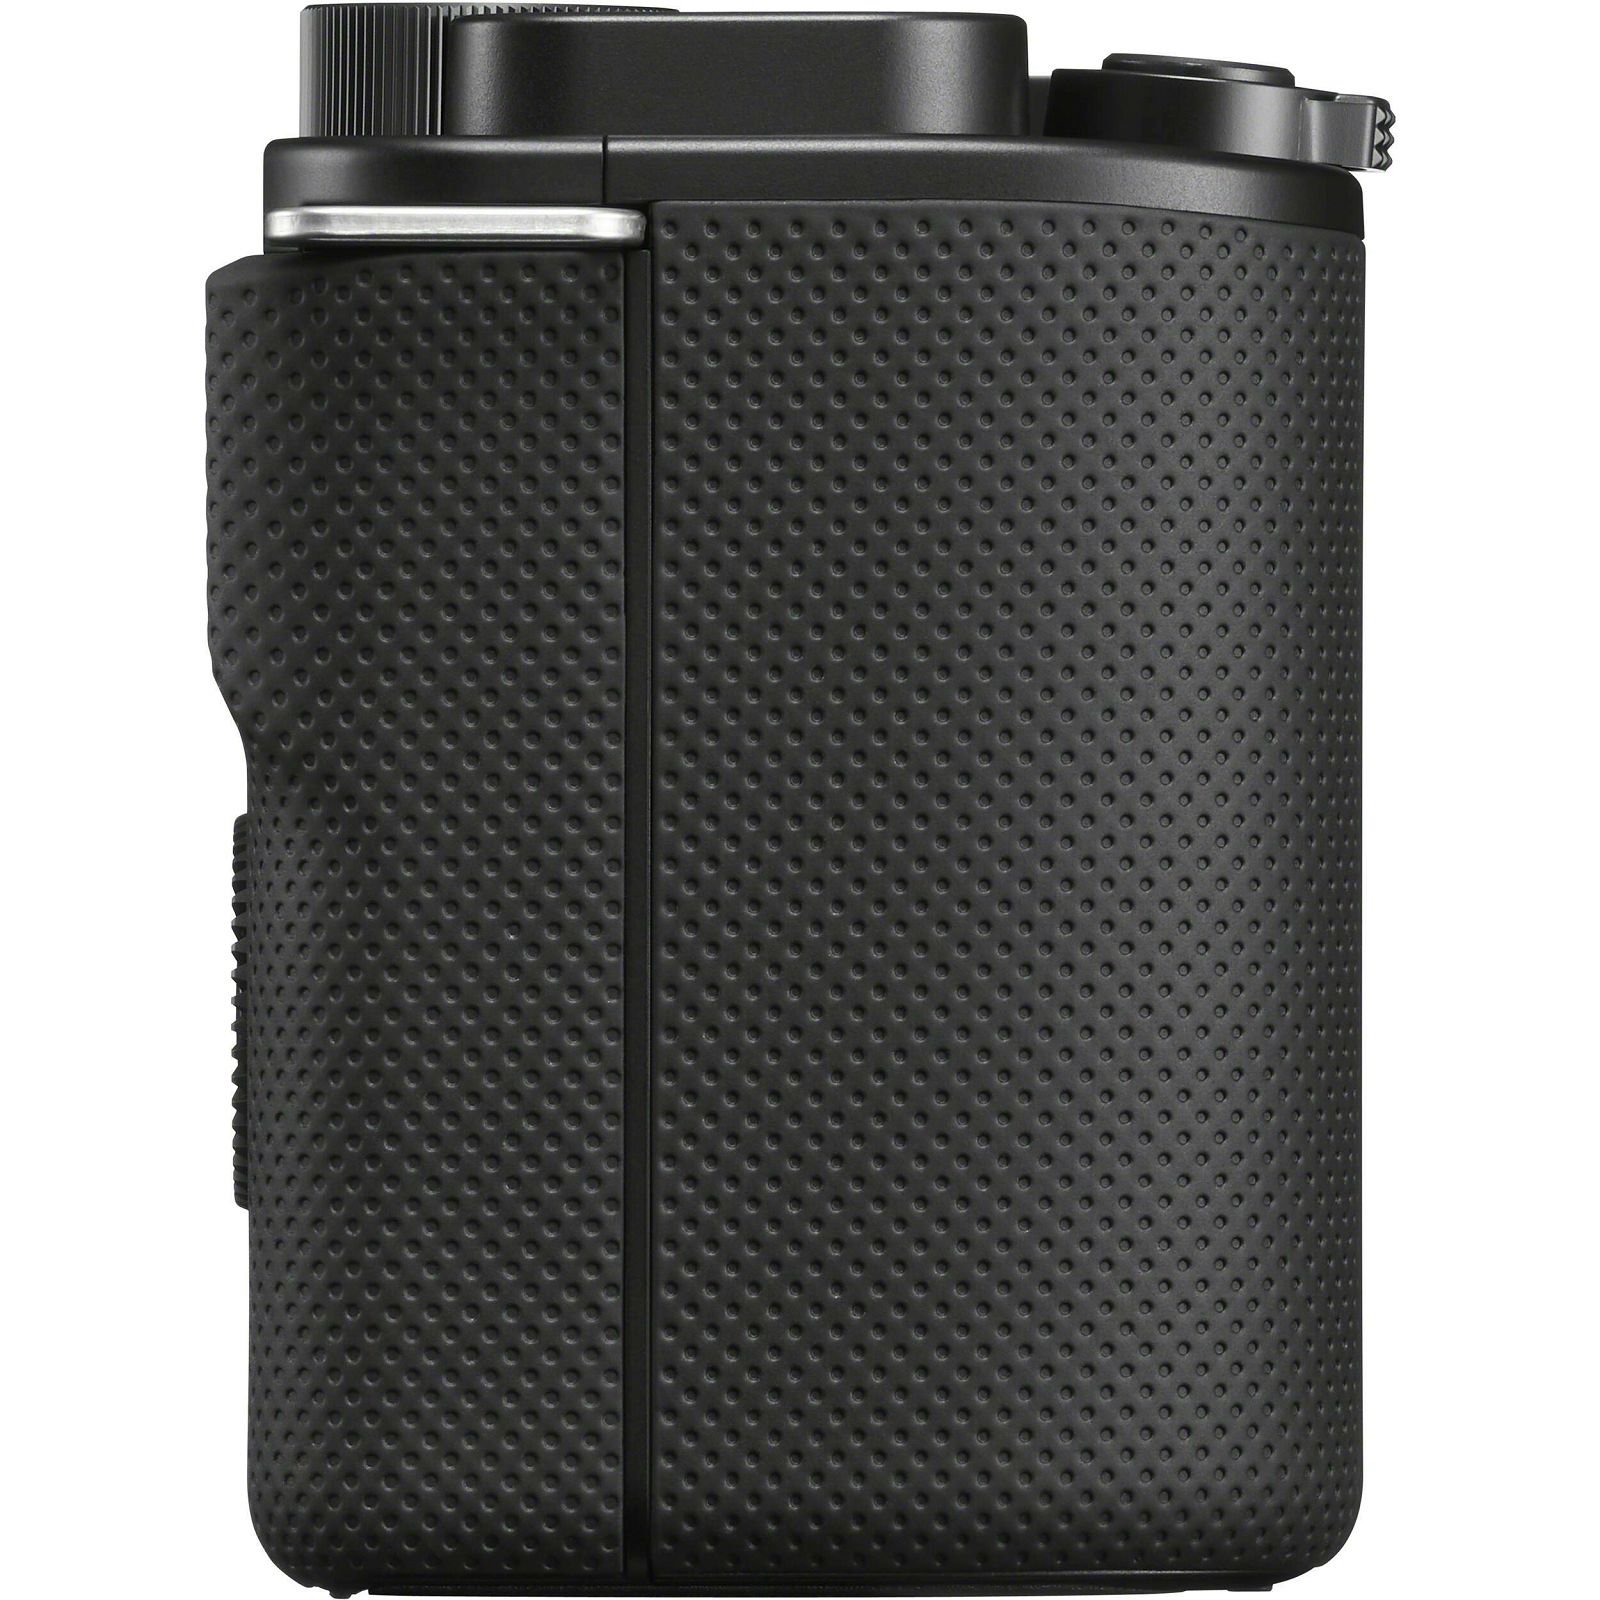 Sony ZV-E10 Body Black Mirrorless bezrcalni fotoaparat ZVE10BDI (ZVE10BDI.EU)